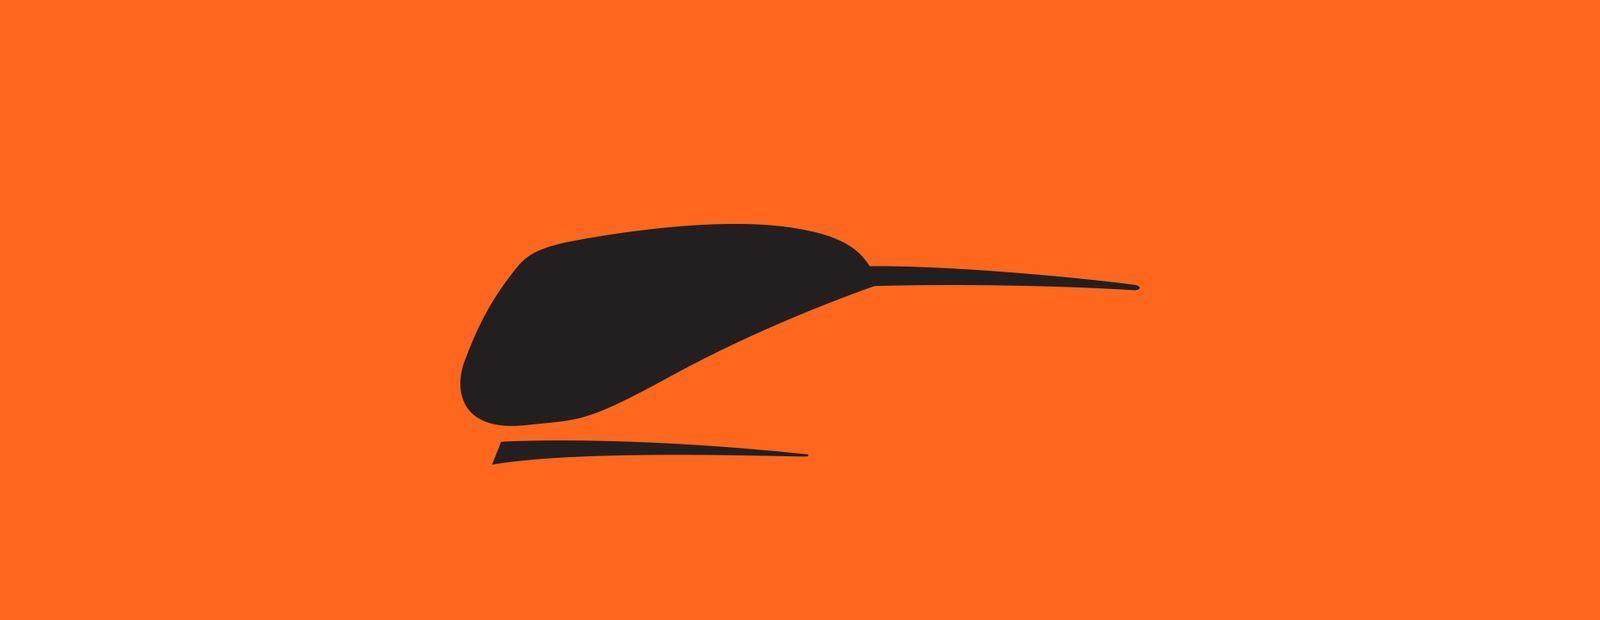 Orange Kiwi Bird Logo - McLaren Formula 1 - Colour by numbers. And a flightless bird